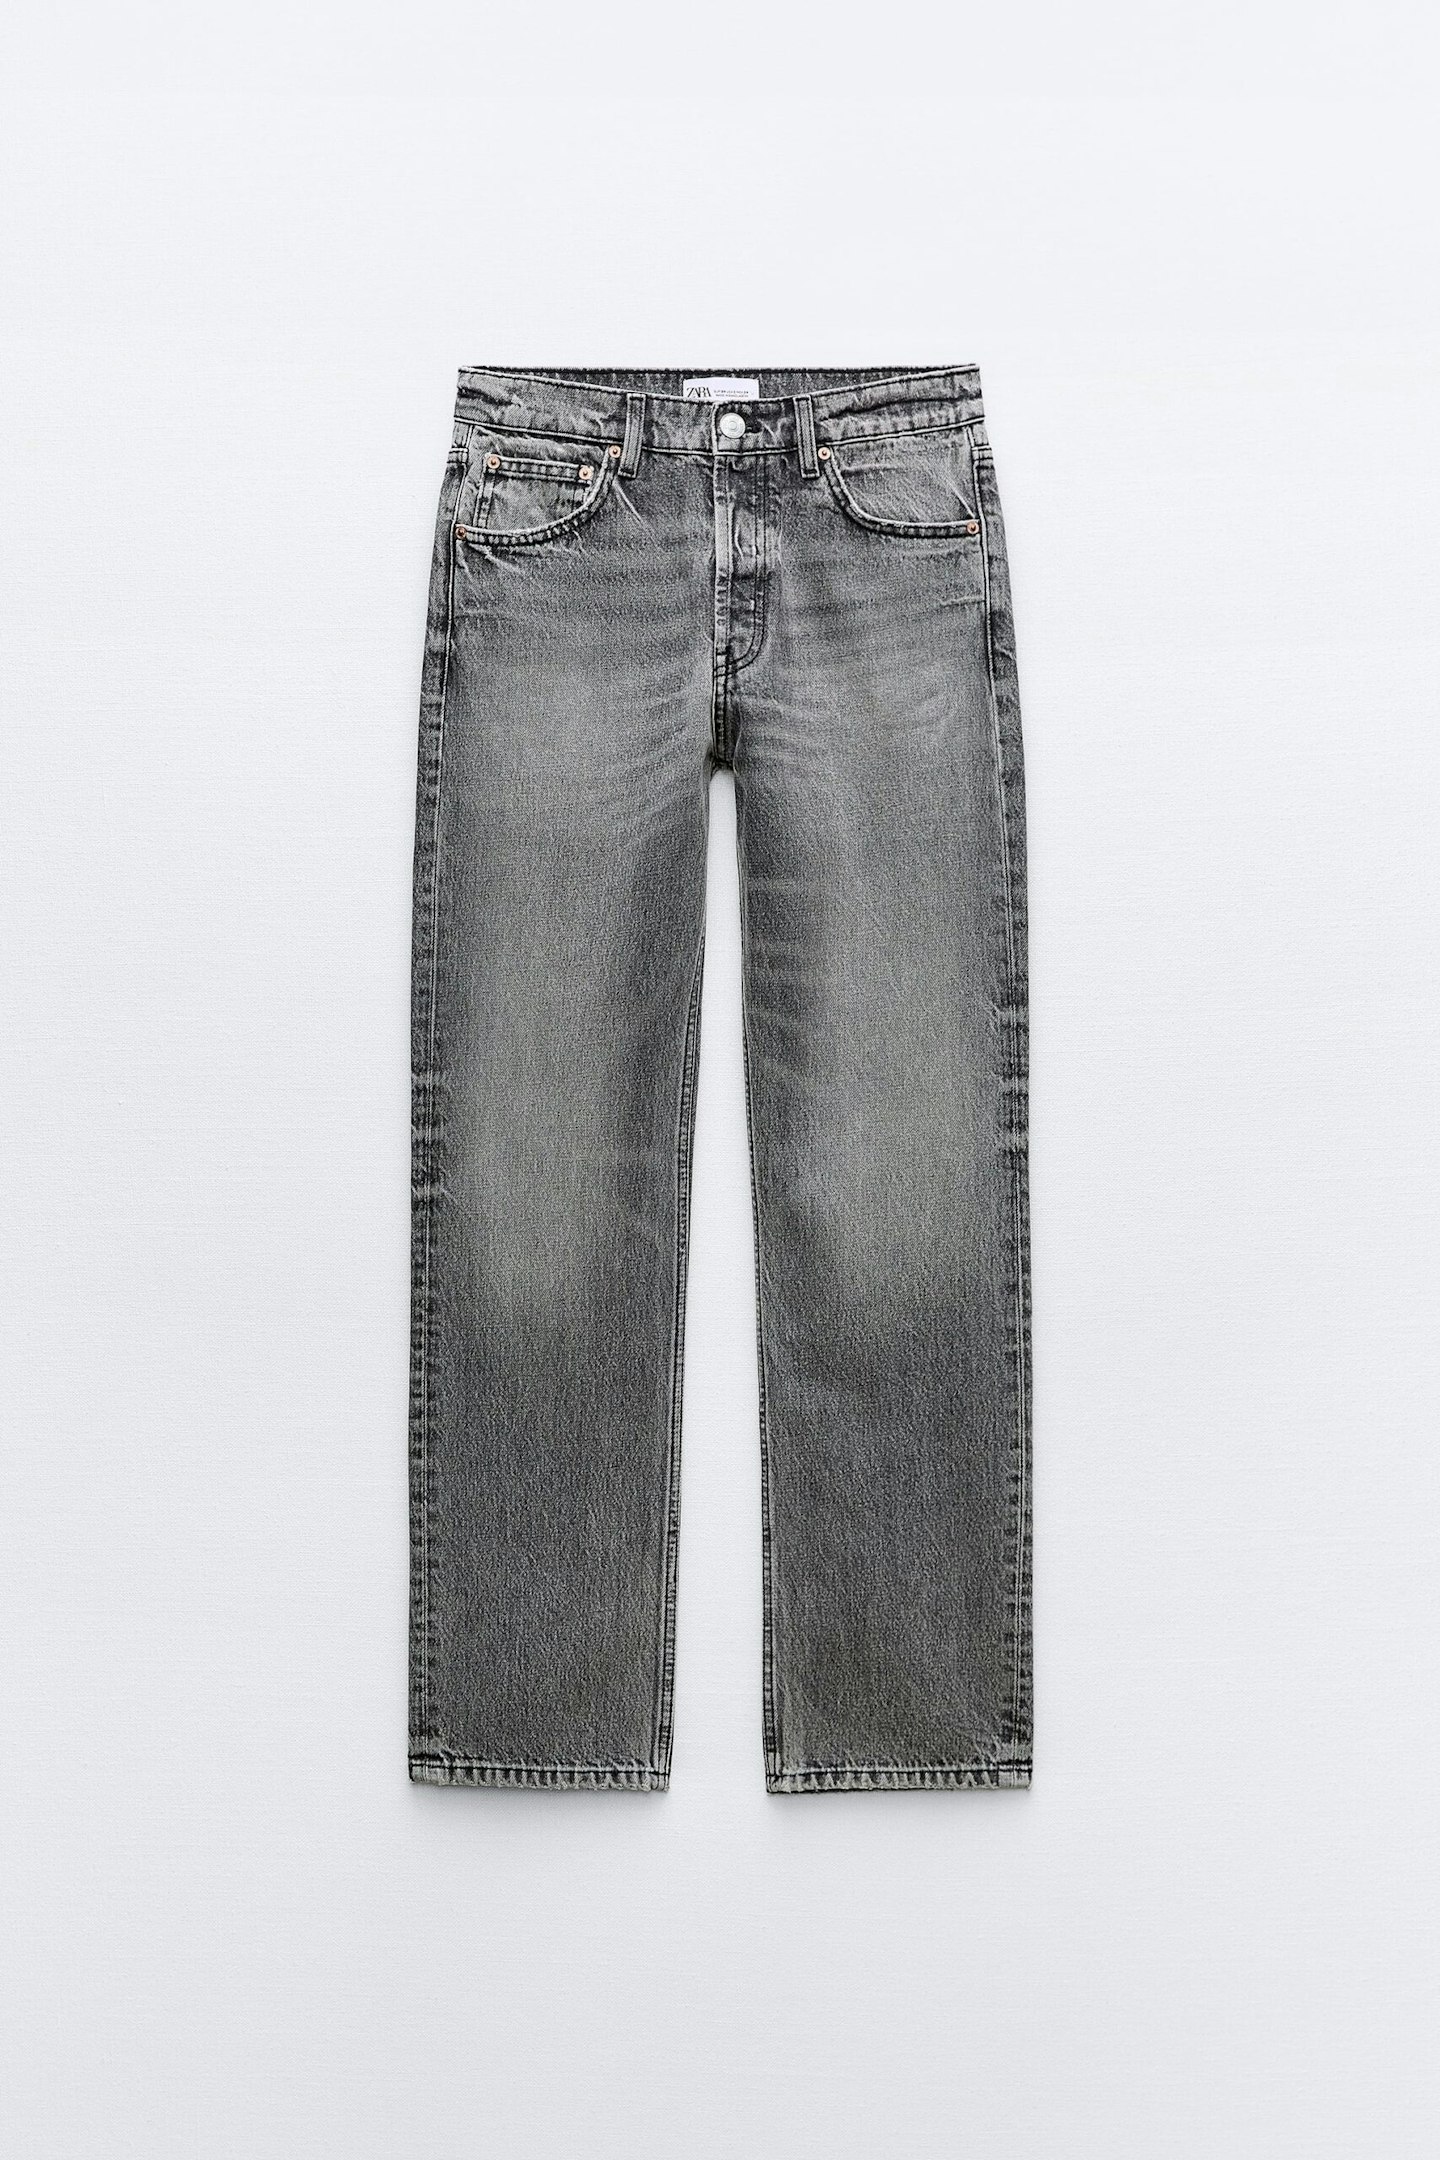 Zara Trf Boyfriend Low-Rise Jeans